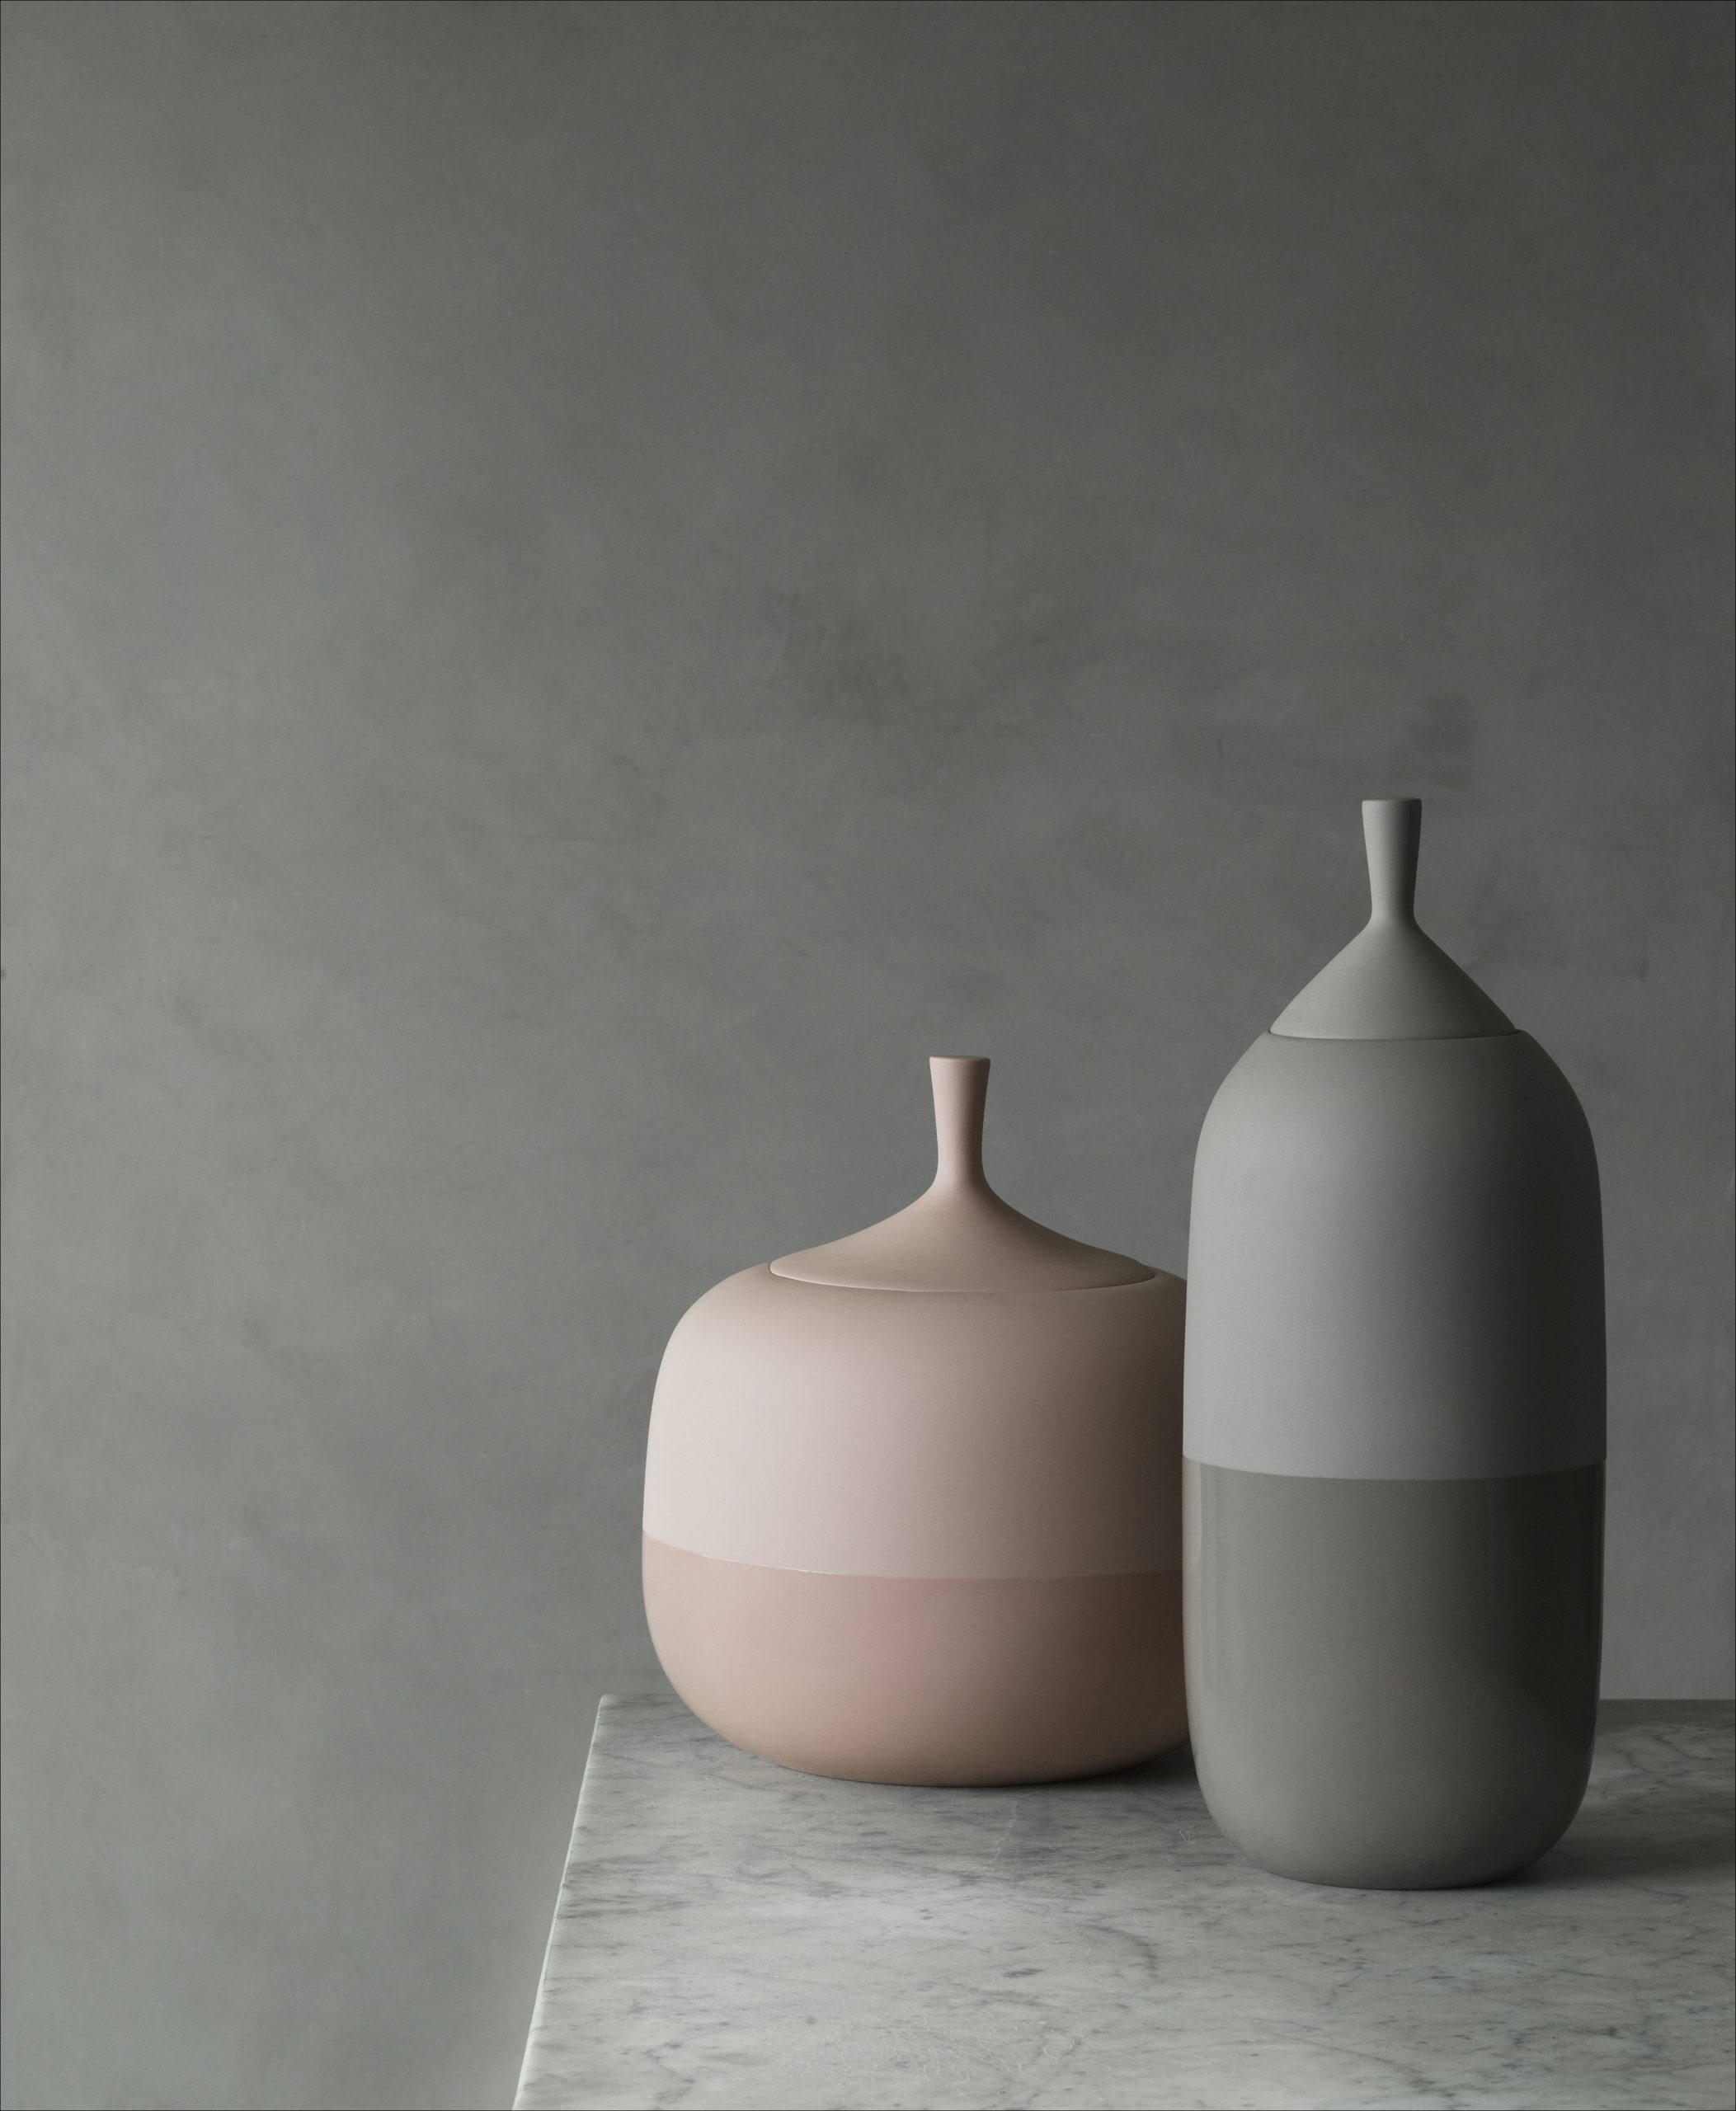 Pepo vases and containers by Debiasi Sandri for Normann Copenhagen